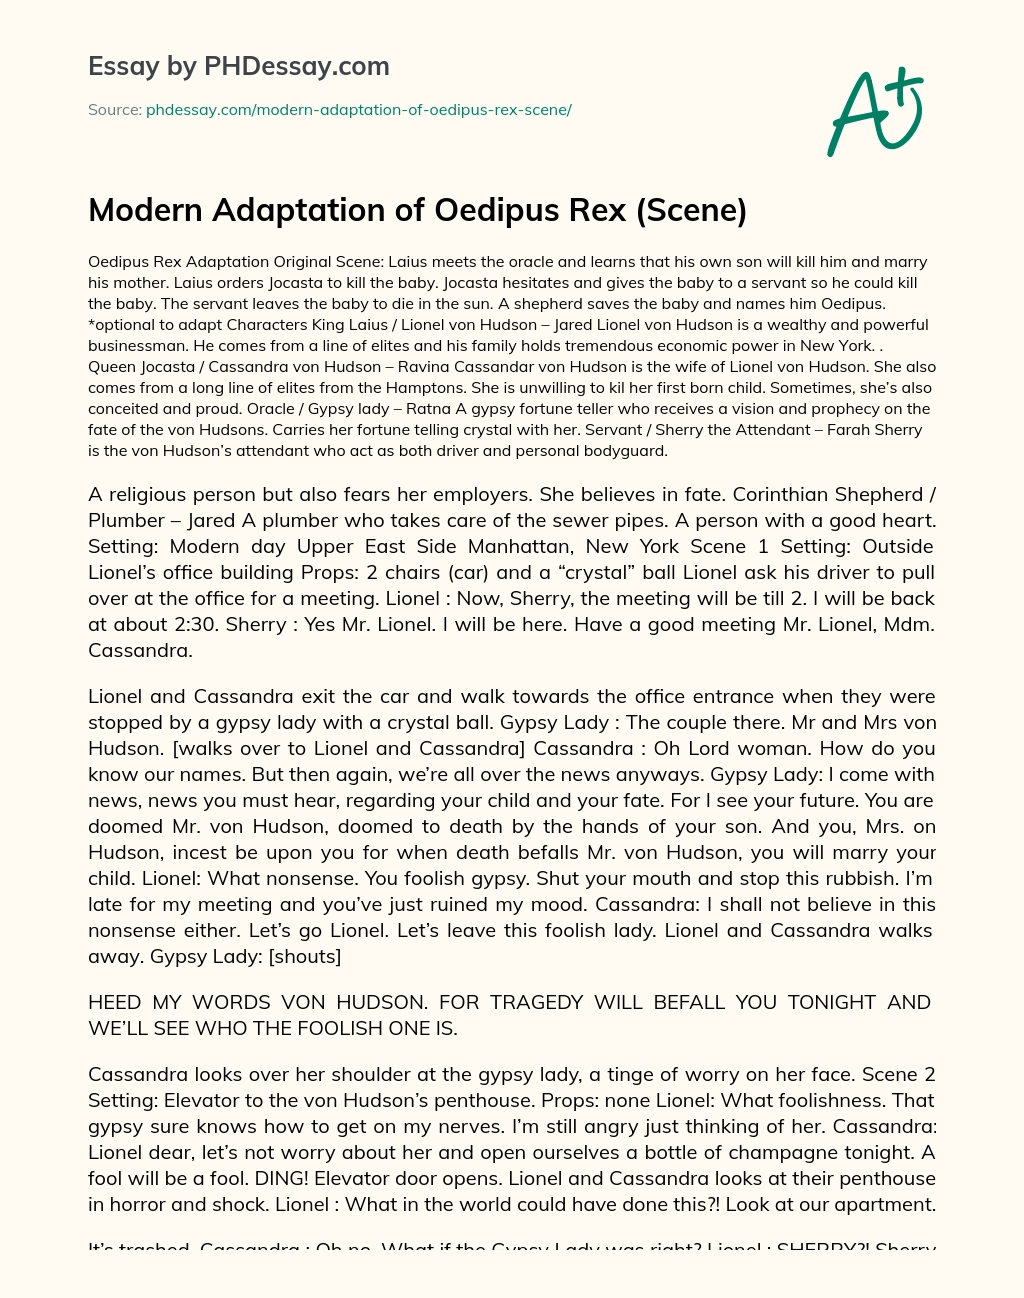 Modern Adaptation of Oedipus Rex (Scene) essay